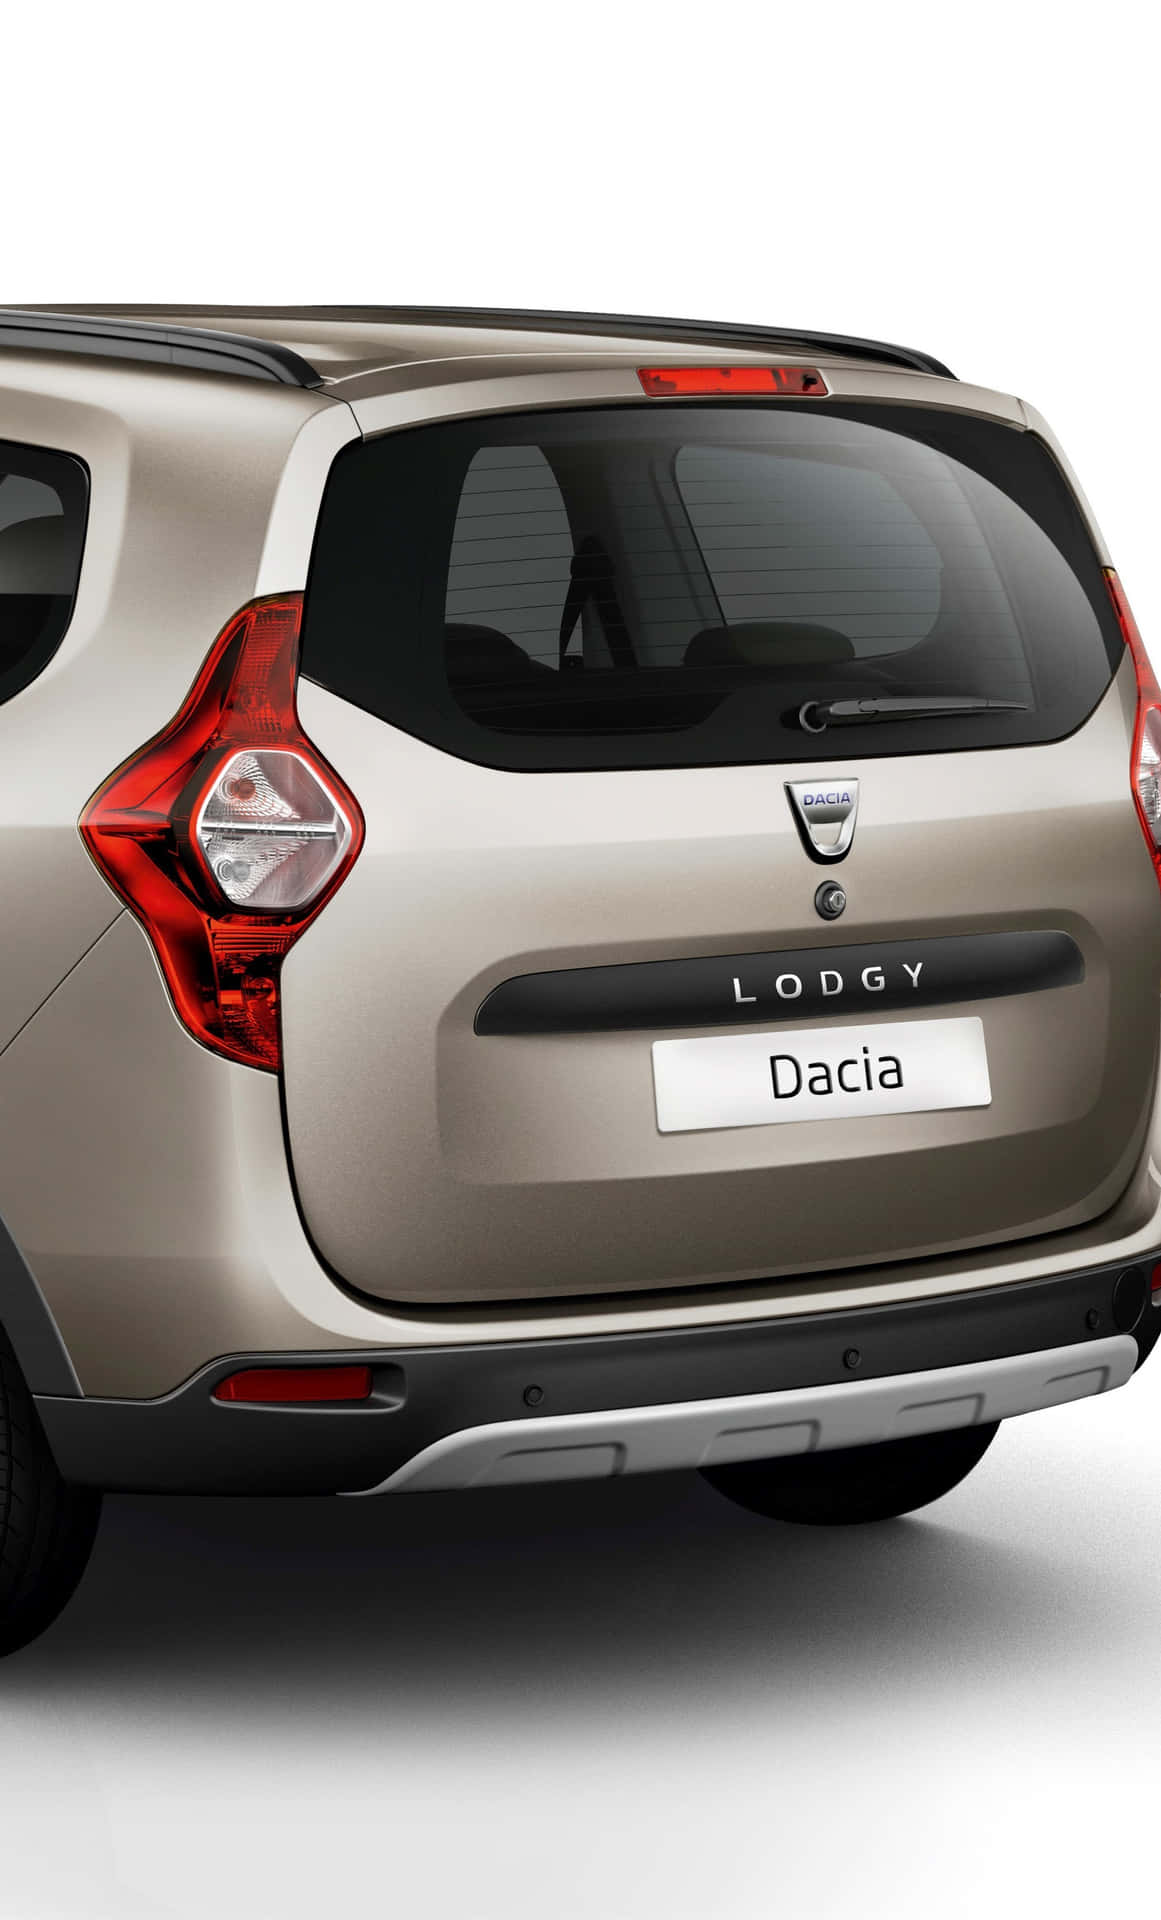 Caption: Stylish And Convenient Dacia Lodgy Wallpaper